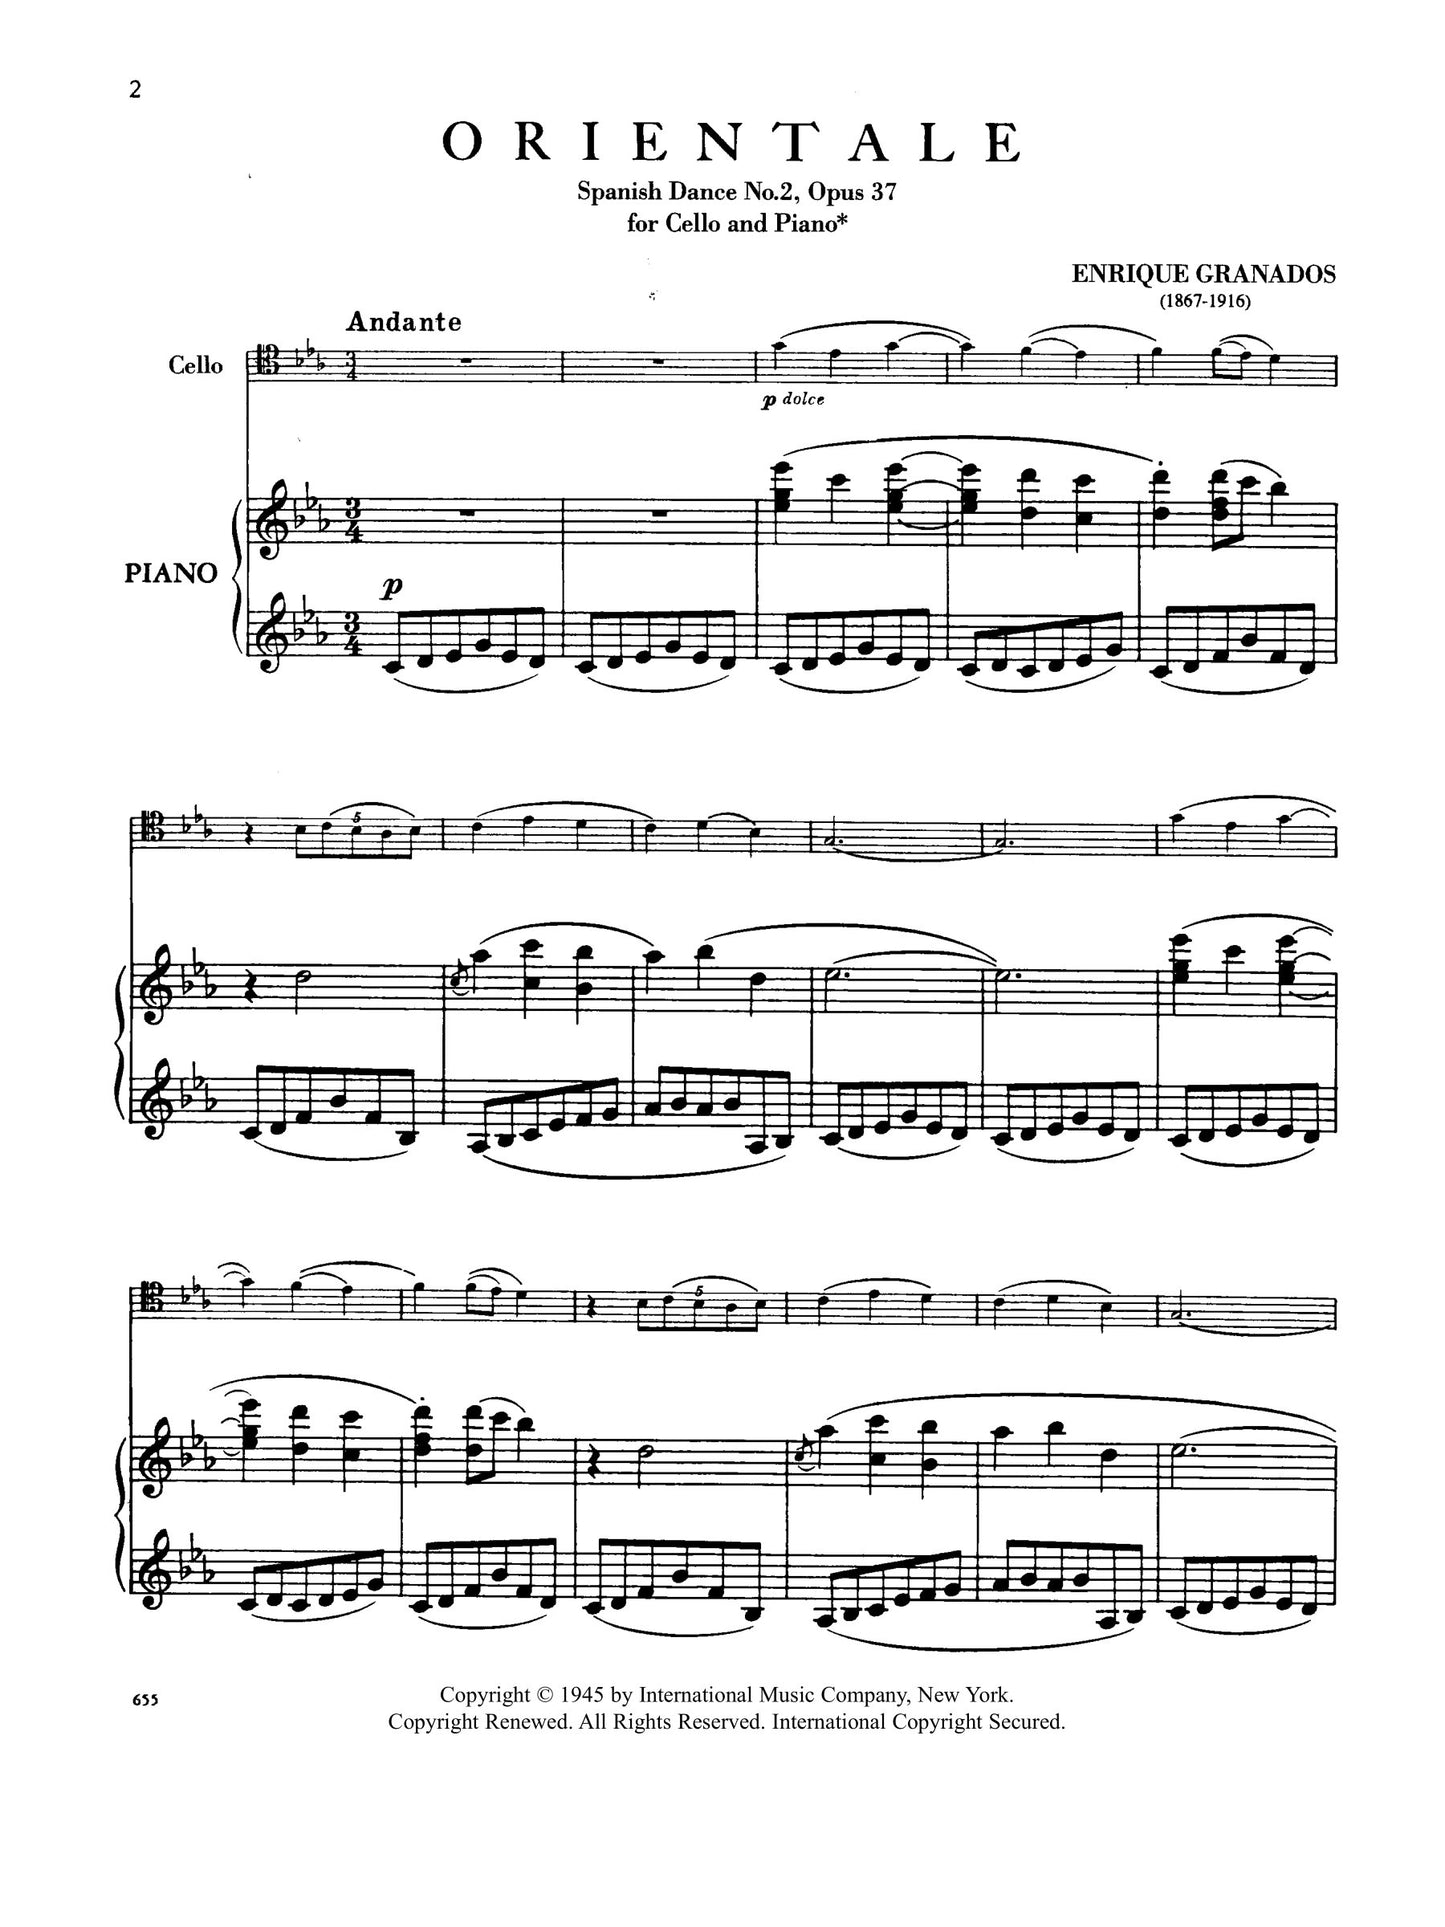 Granados - Orientale (Spanish Dance, No. 2 Op. 37) For Cello With Piano Accompaniment